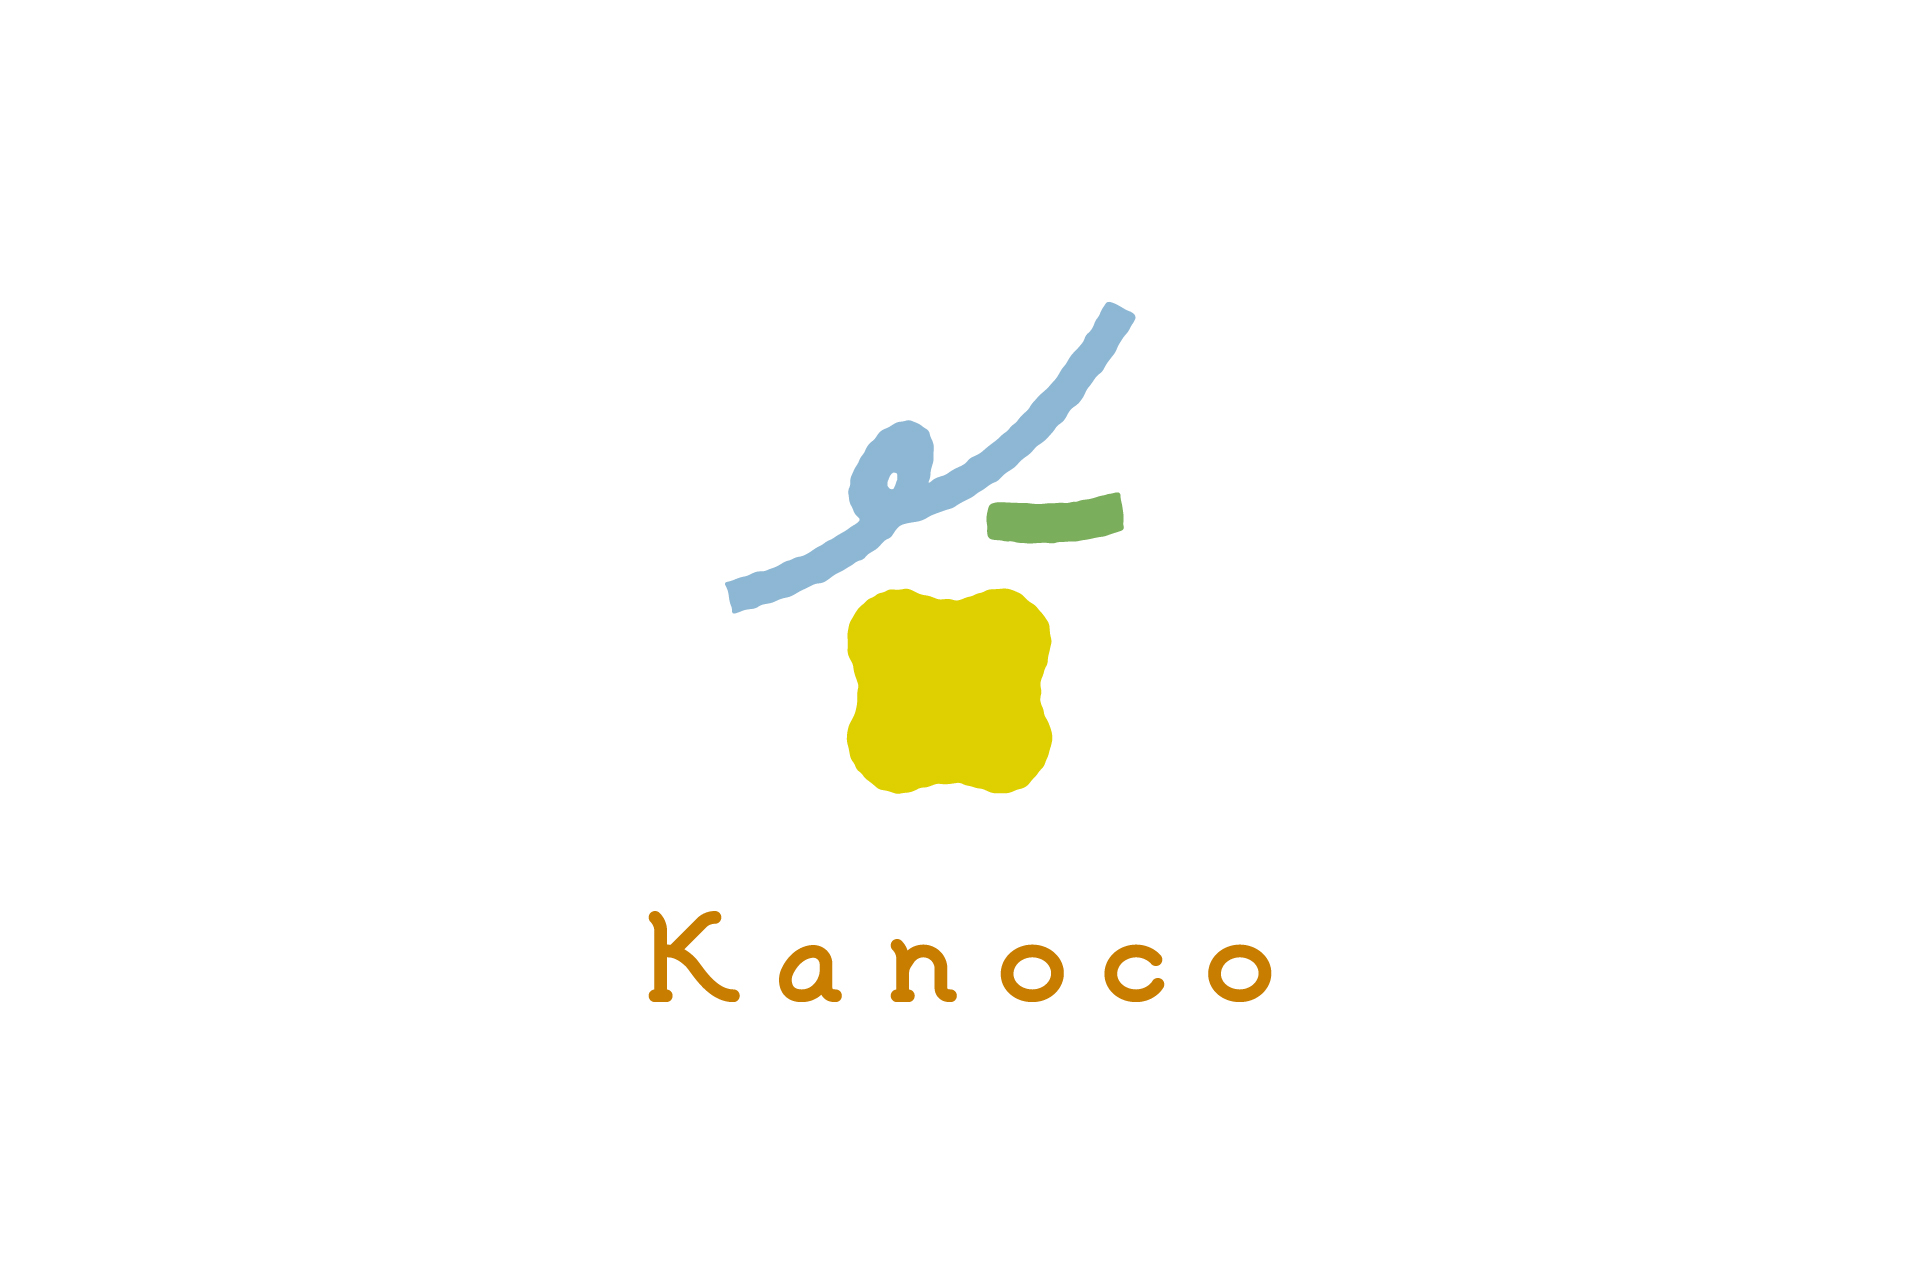 Kanoco